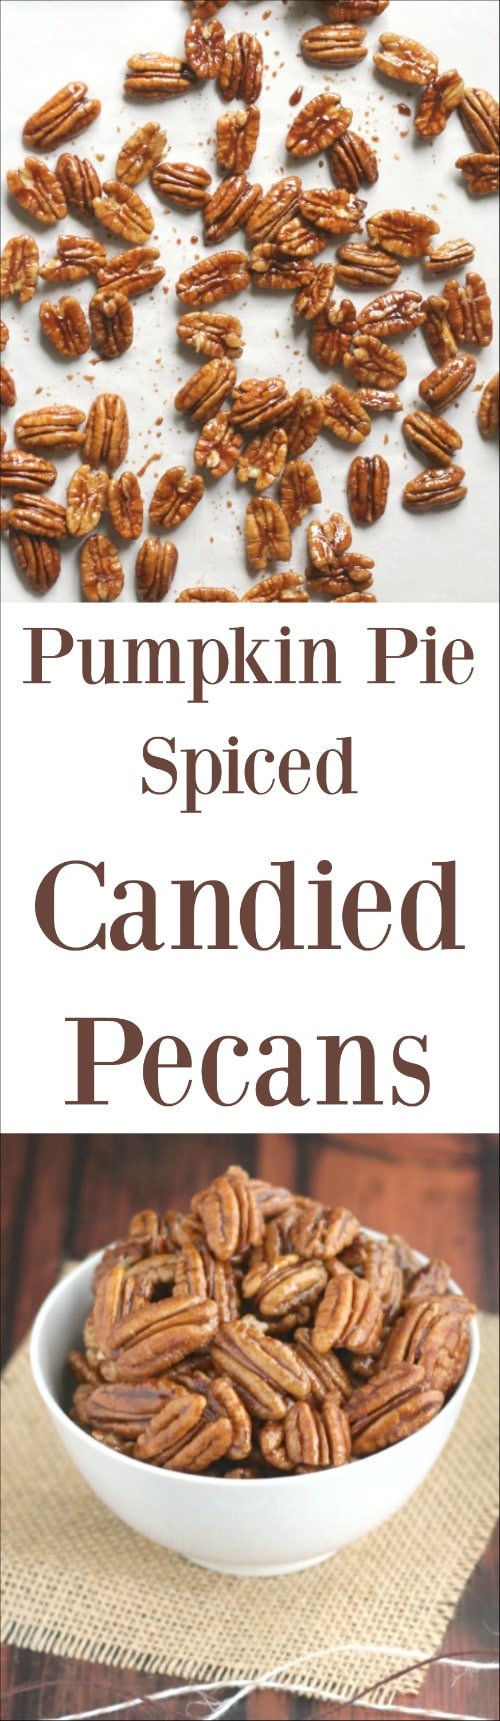 Pumpkin Pie Spiced Candied Pecans Recipe {www.TwoHealthyKitchens.com}